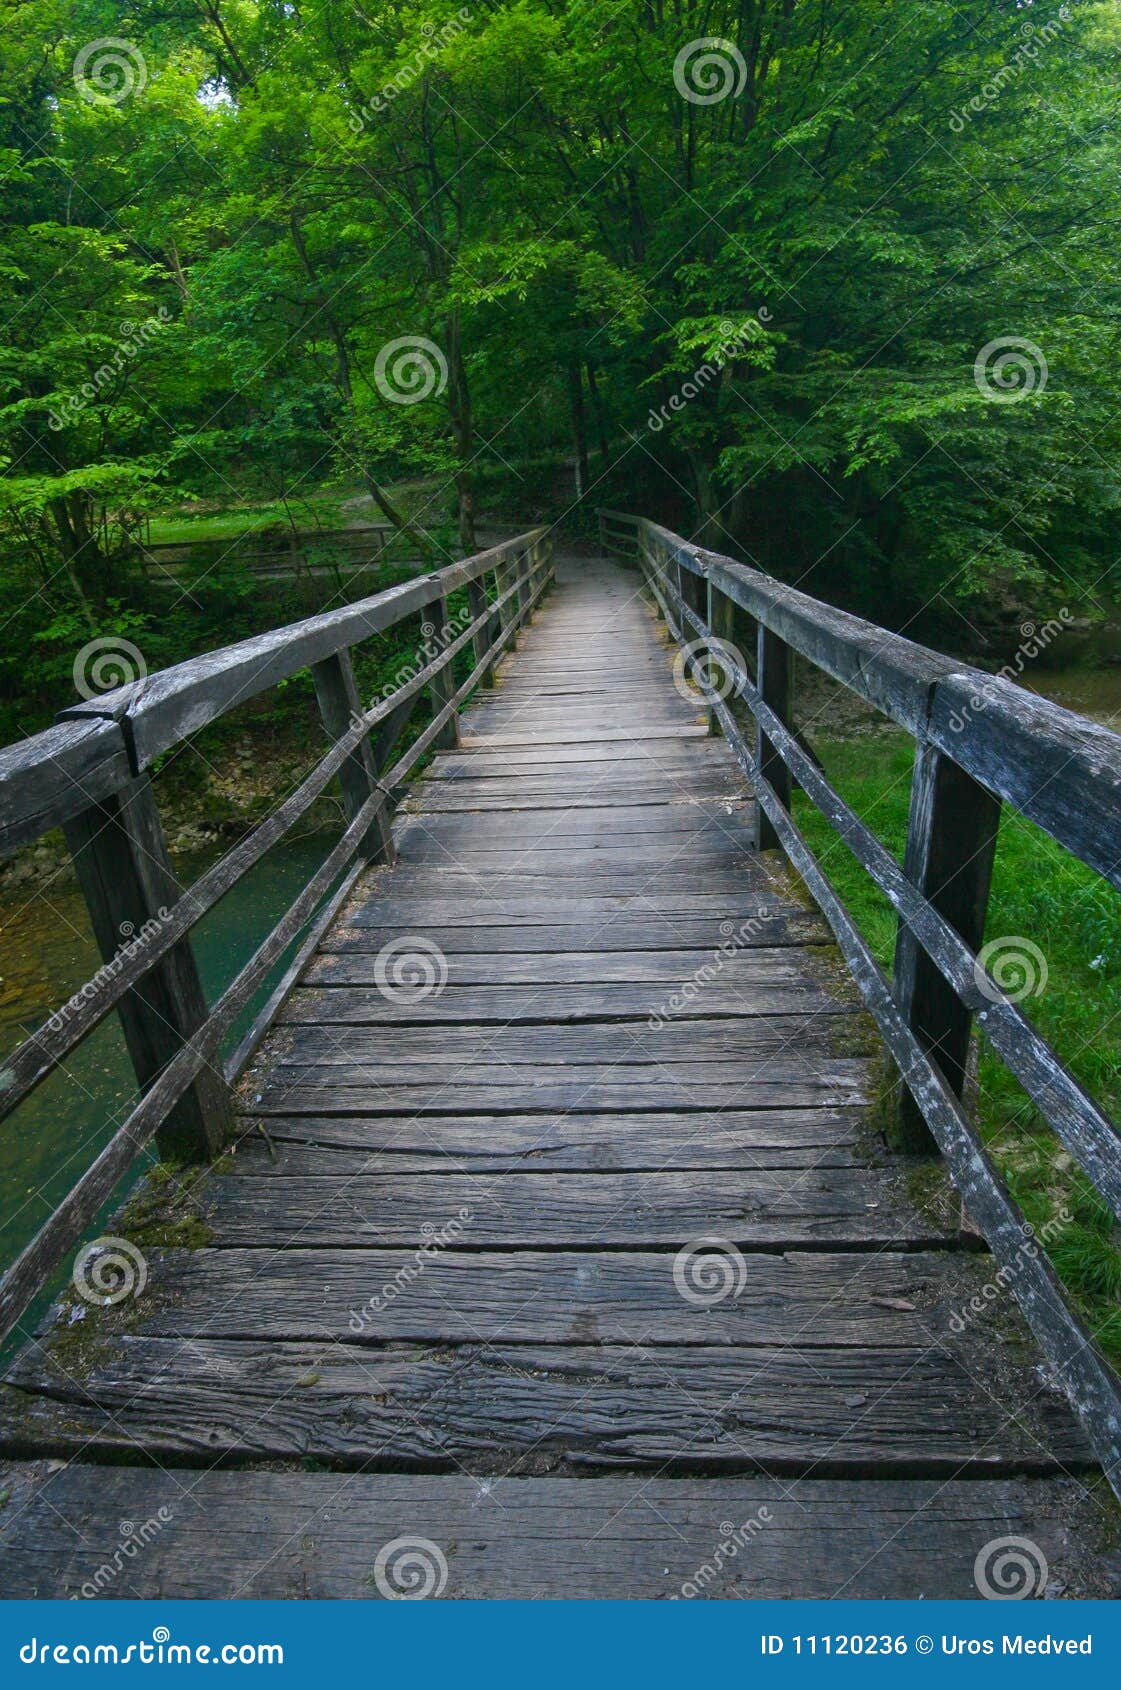 Wooden Footbridge Royalty Free Stock Image - Image: 11120236